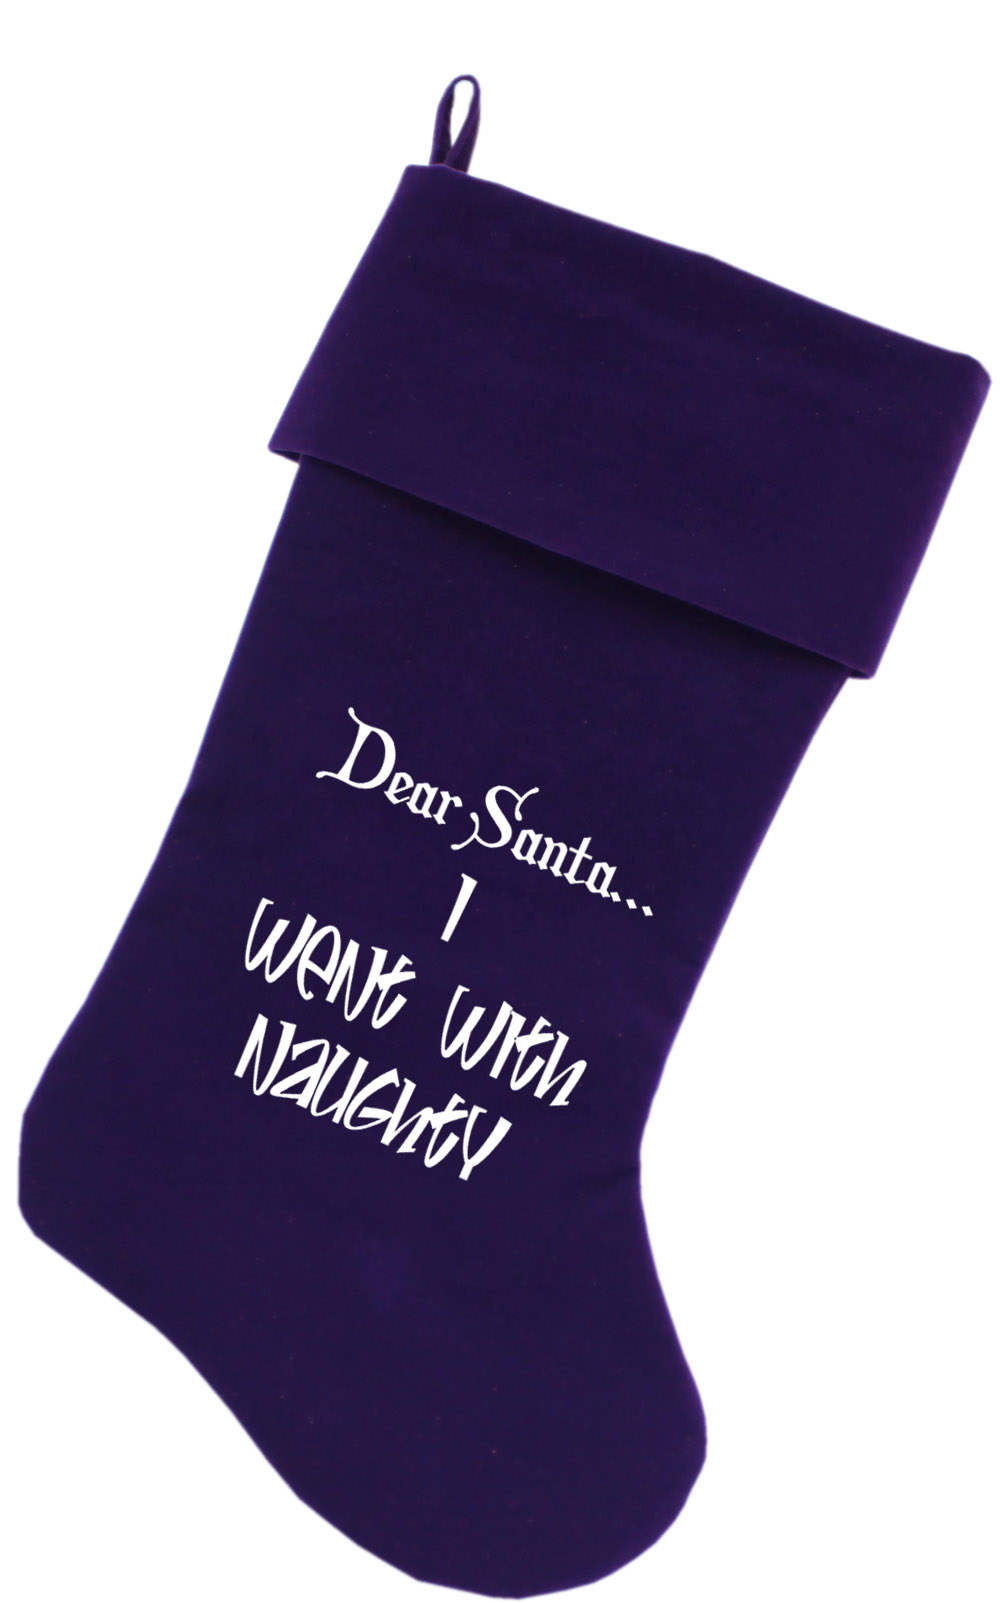 Went with Naughty Screen Print 18 inch Velvet Christmas Stocking Purple